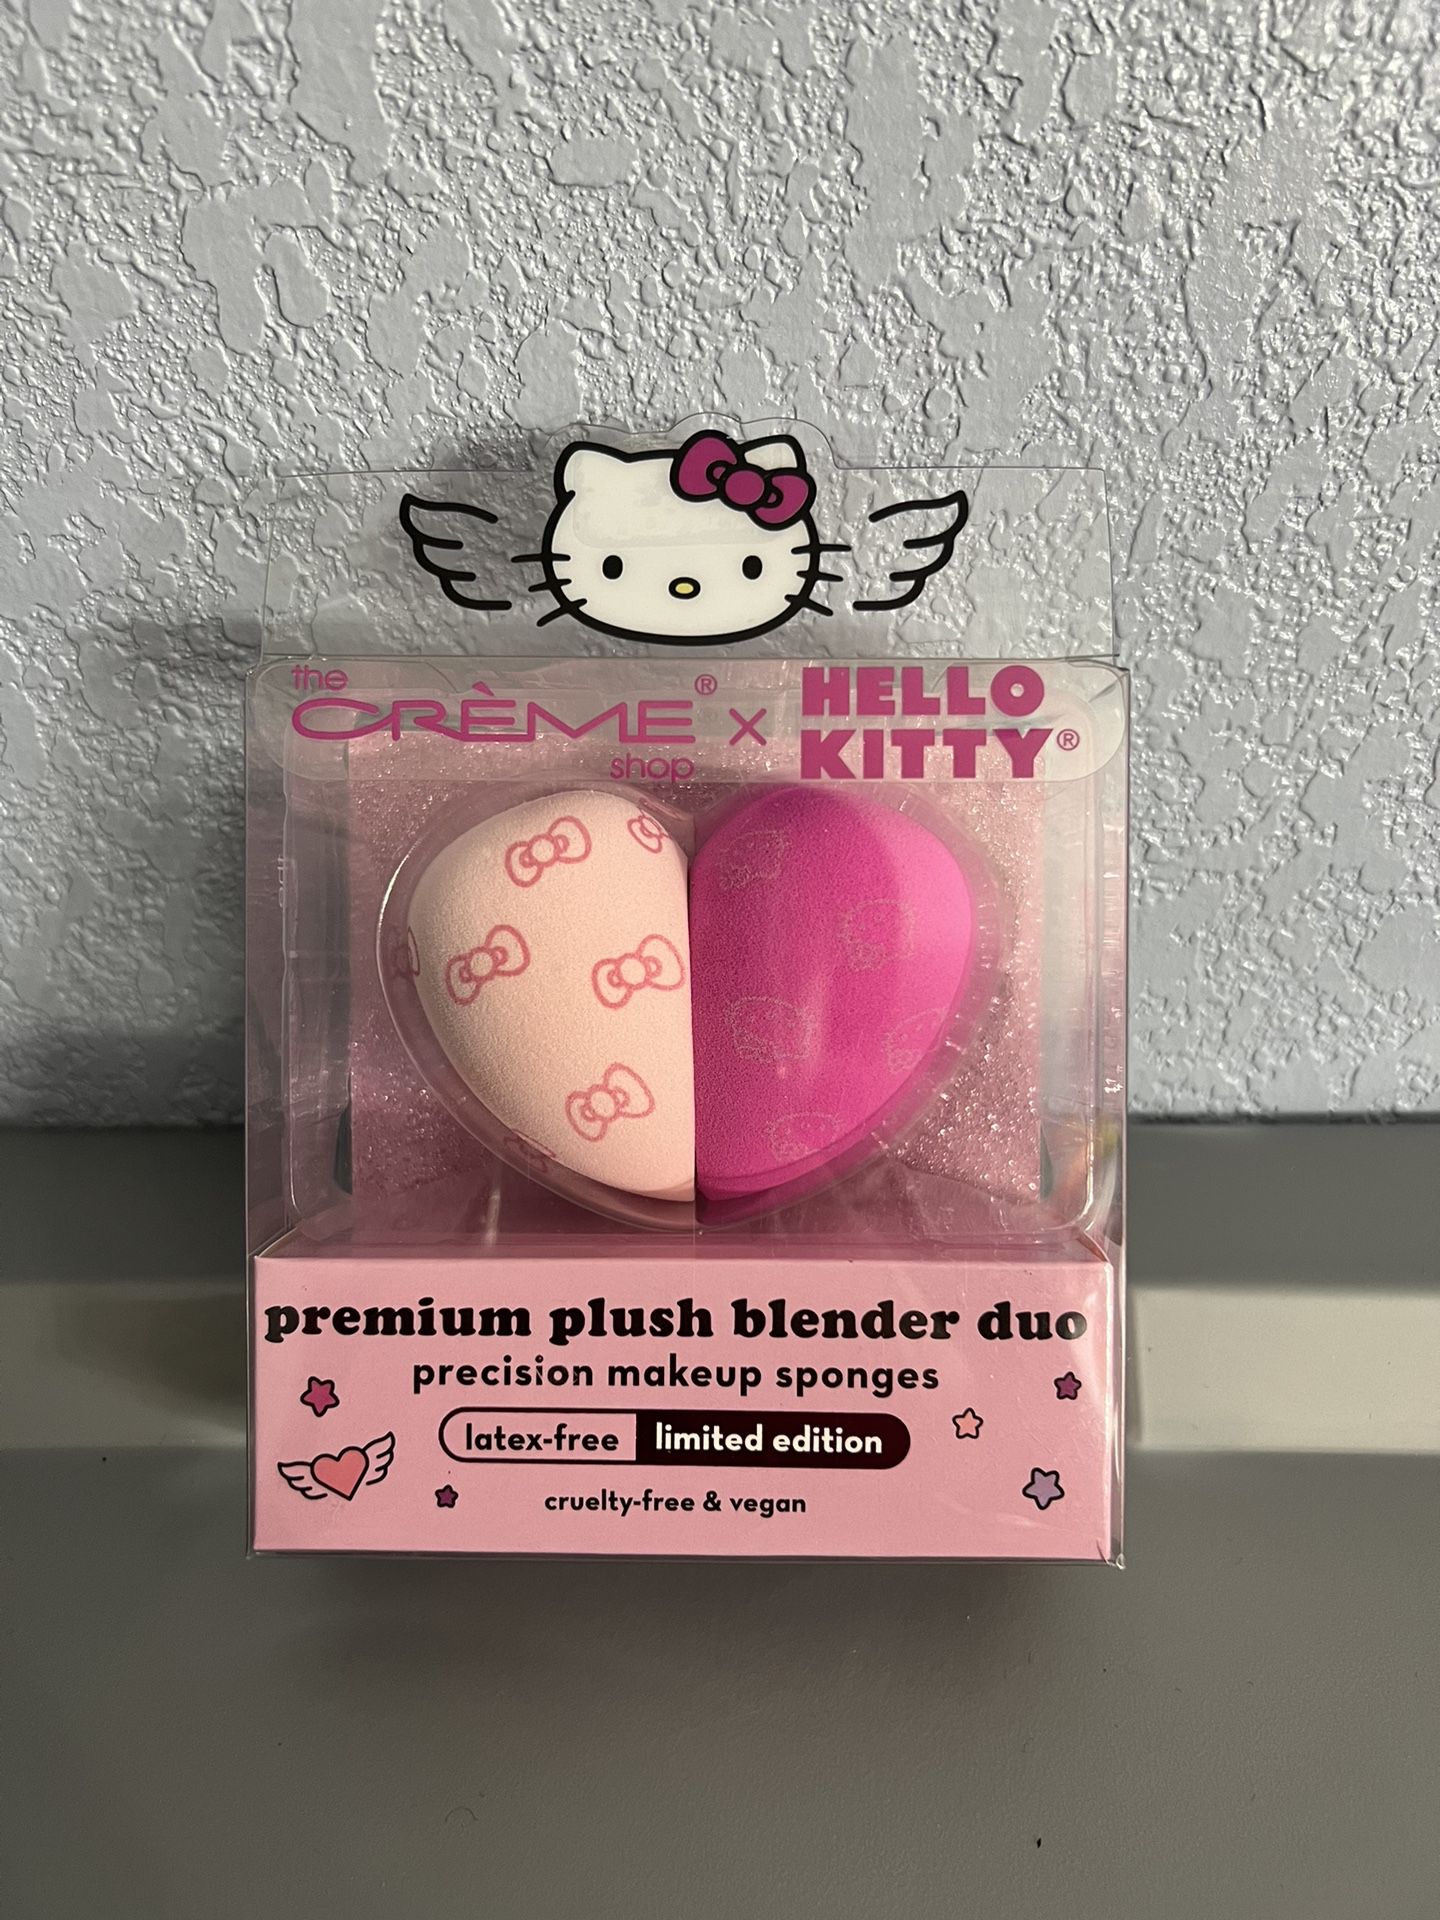 The Crème Shop x Hello Kitty Premium Plush Blender Duo